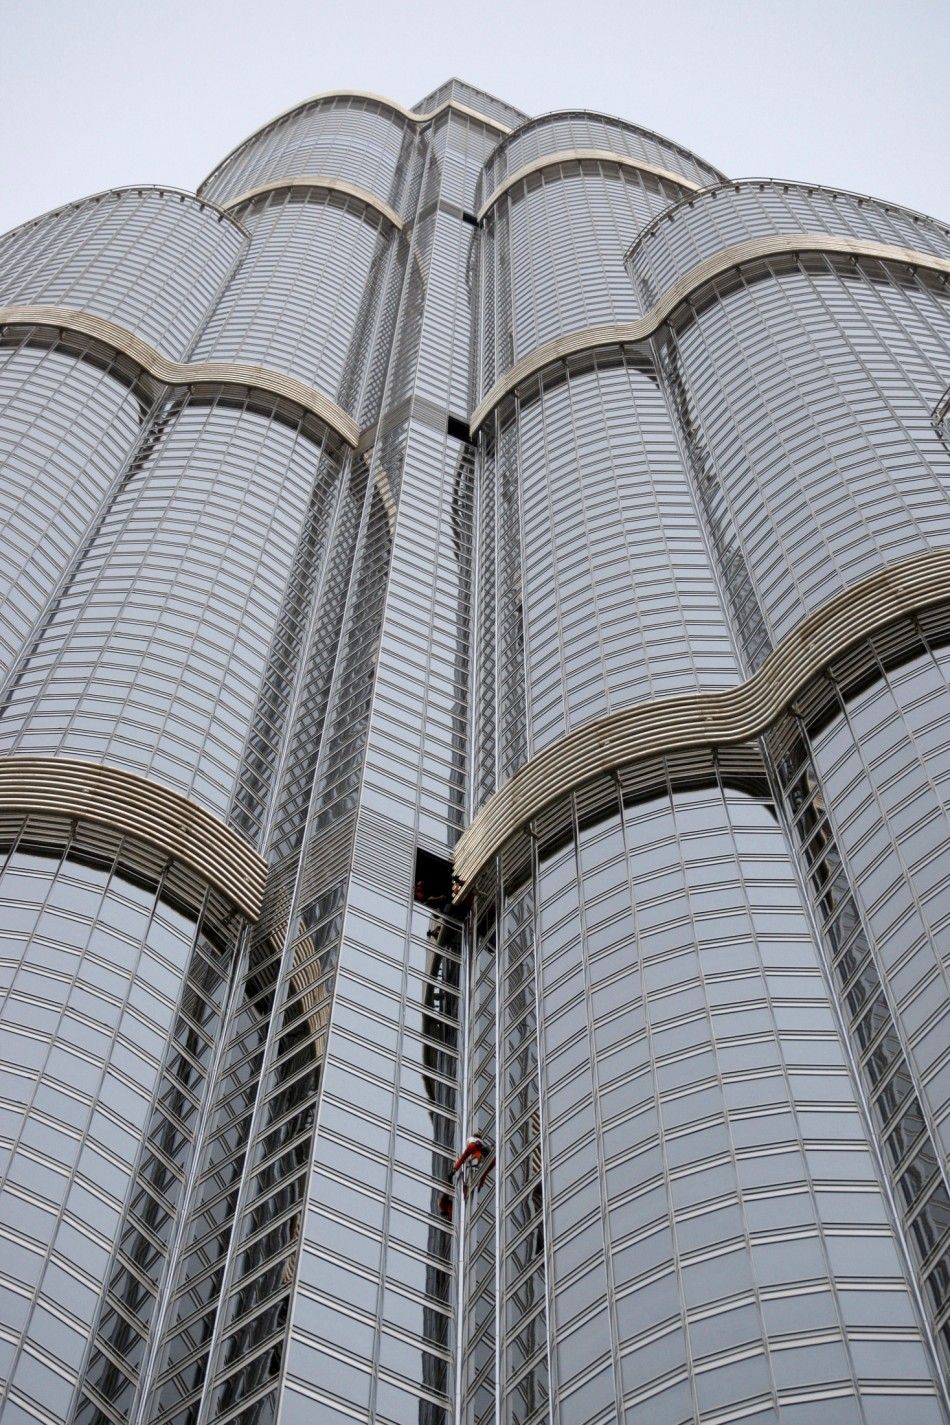 French climber Alain Robert scales the worlds tallest tower, the Burj Khalifa, in Dubai